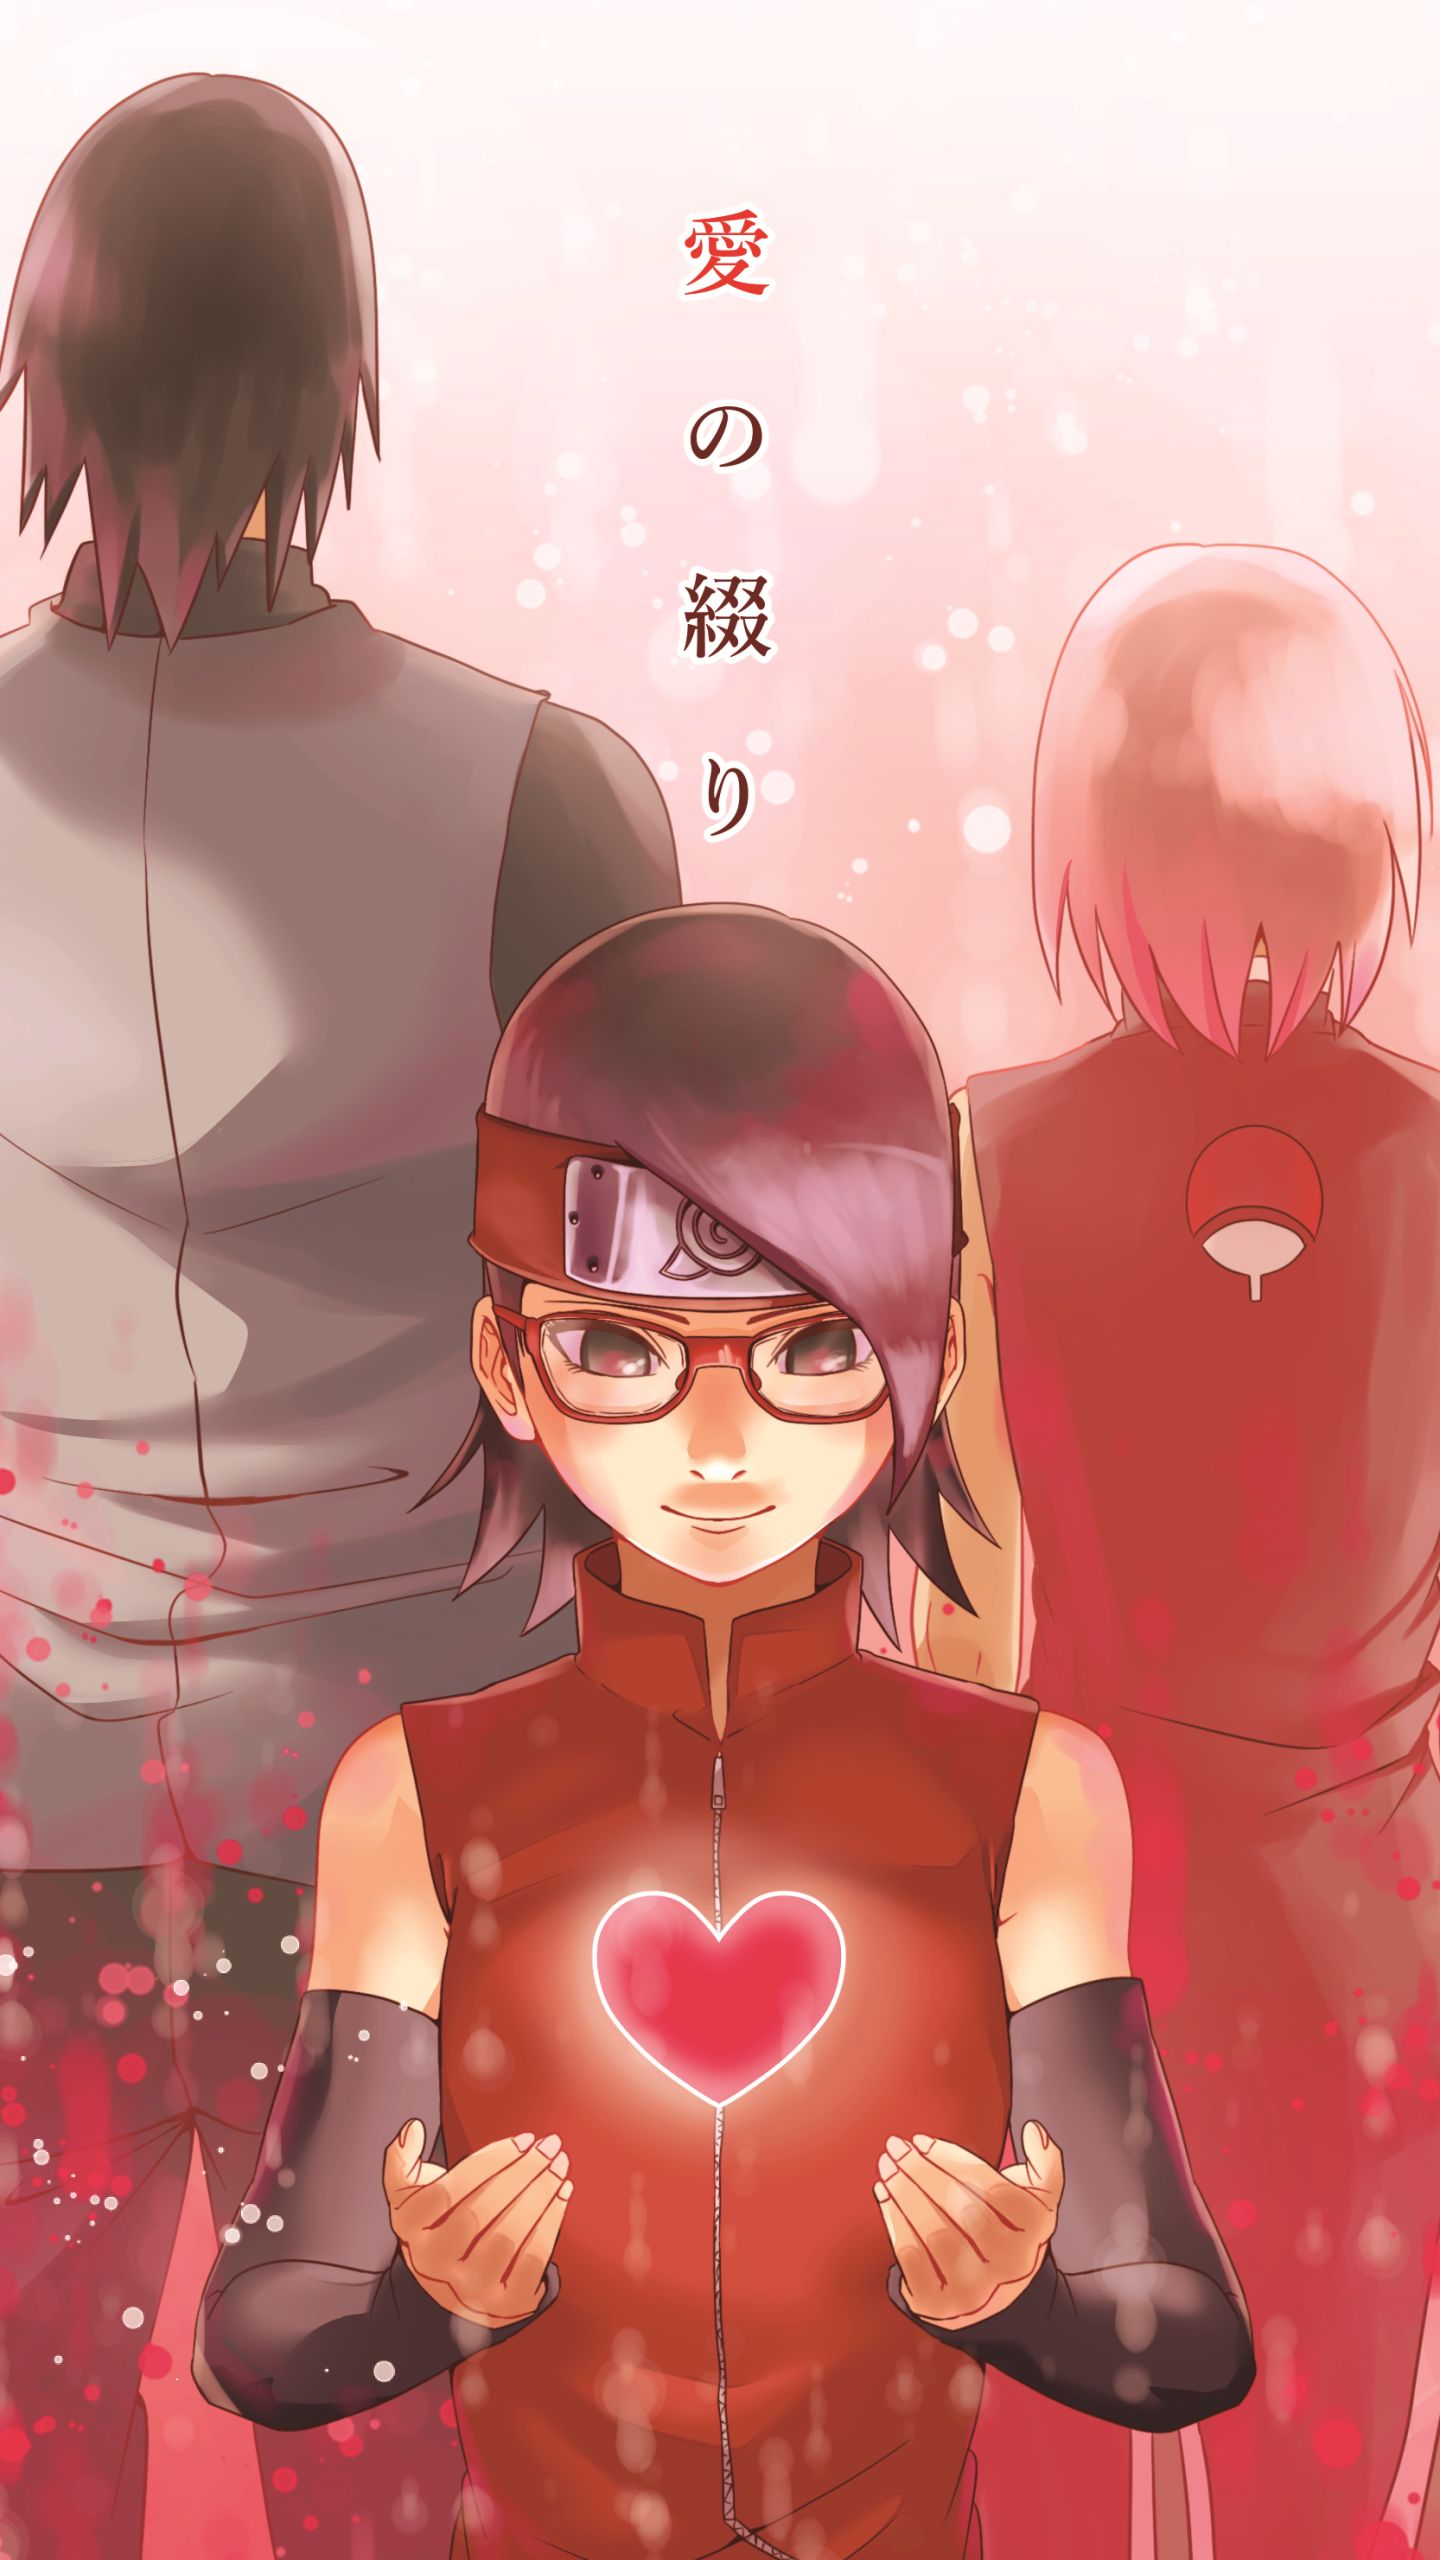 Sasuke and Sakura wallpaper by senseixedits  Download on ZEDGE  ebe5